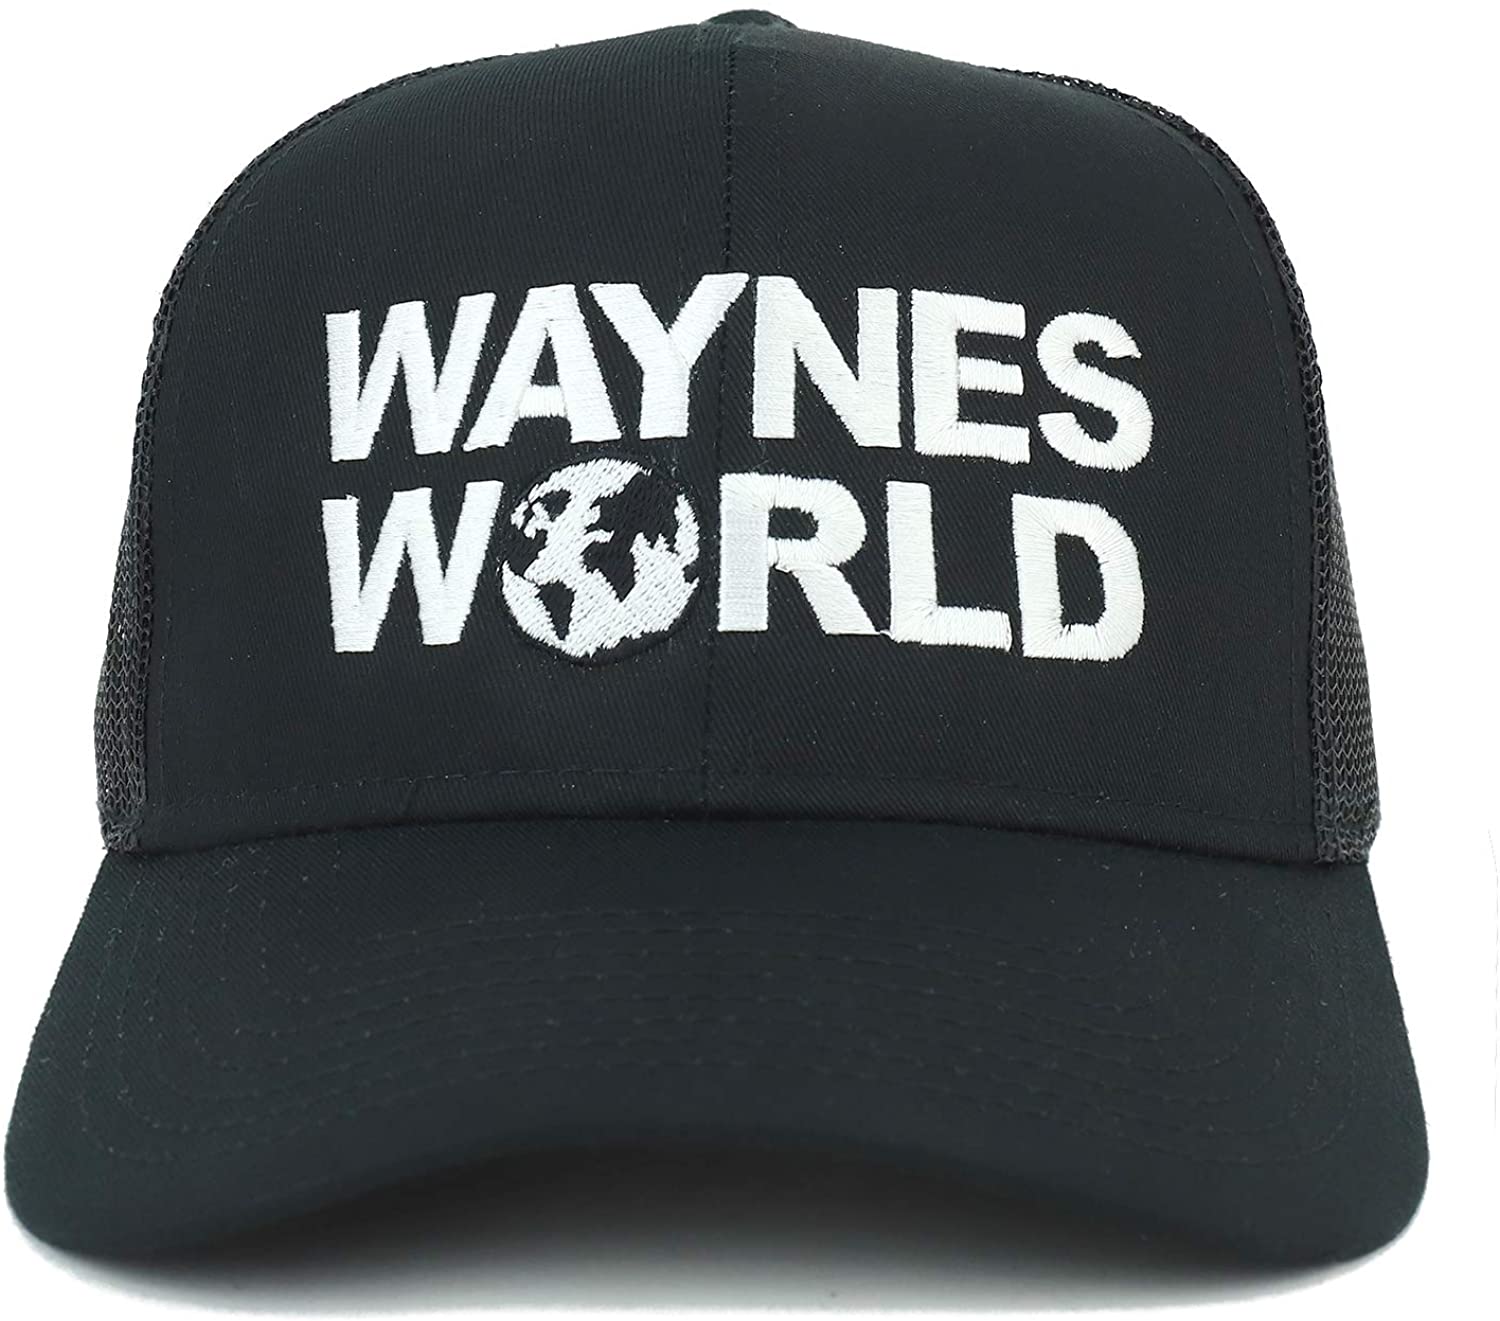 Armycrew XXL Oversize Wayne's World Embroidered Trucker Mesh Cap